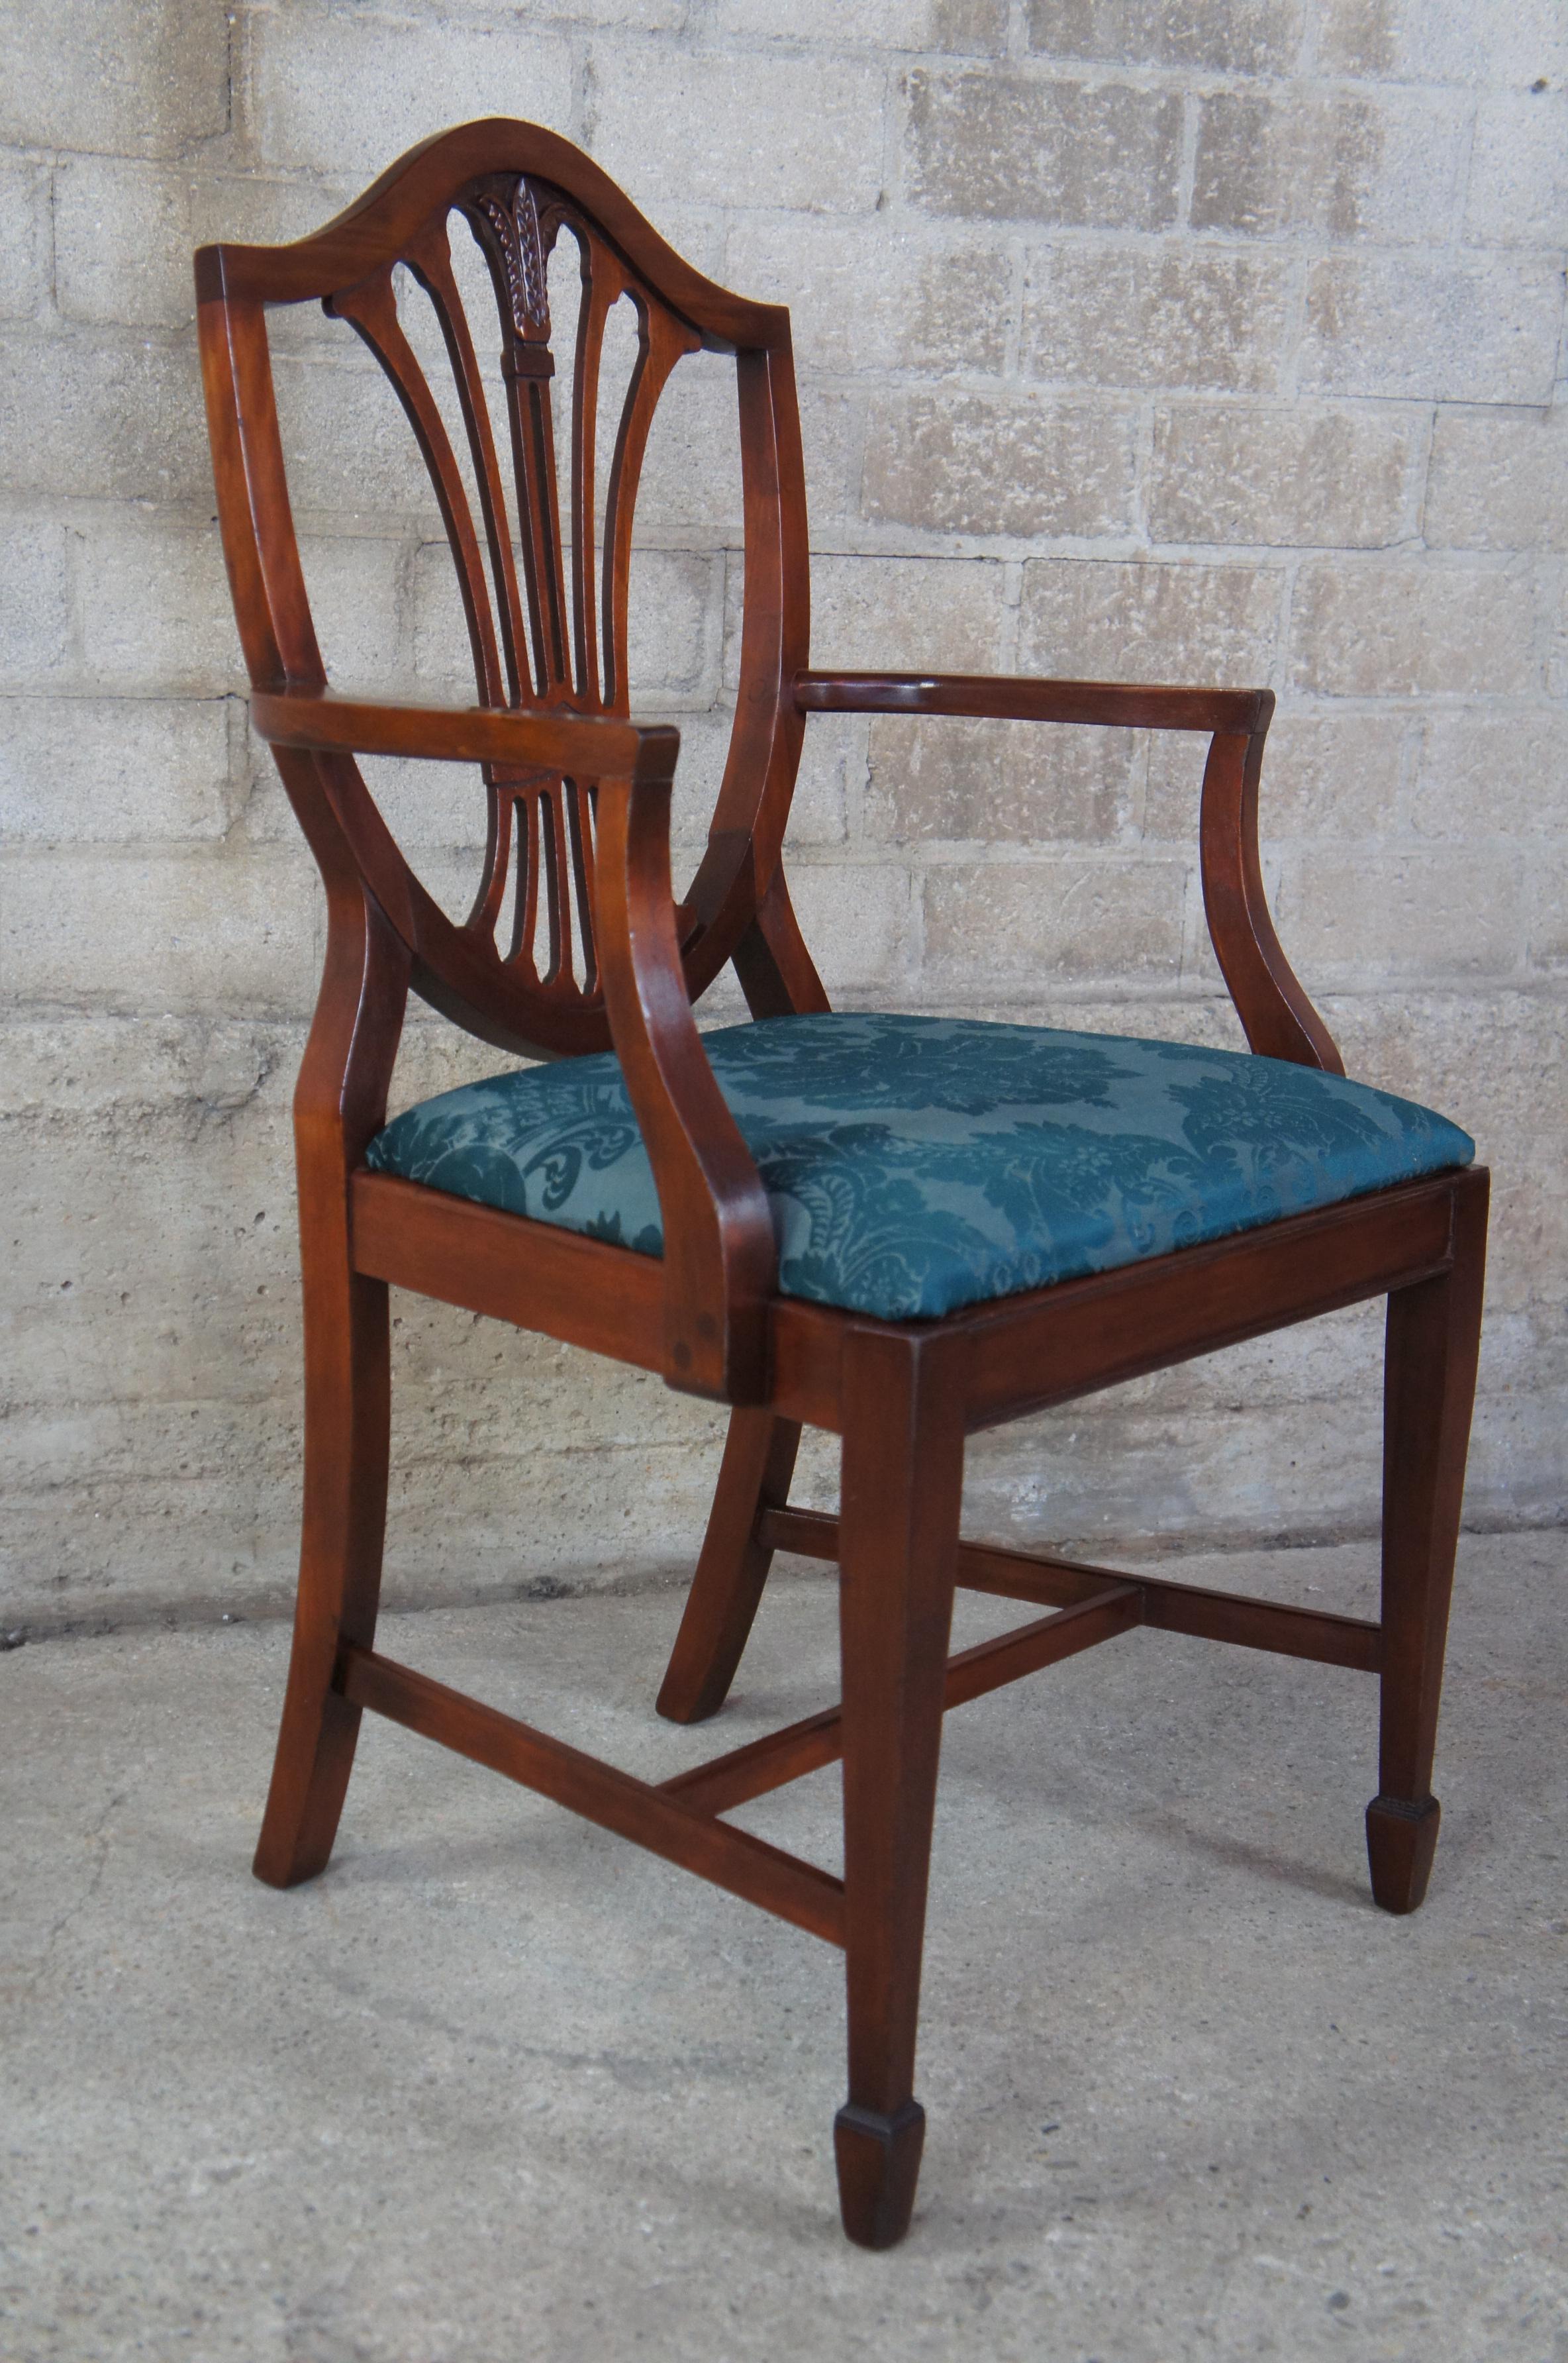 4 Antique Mahogany Sheraton Style Hepplewhite Shield Back Side Dining Chairs 2